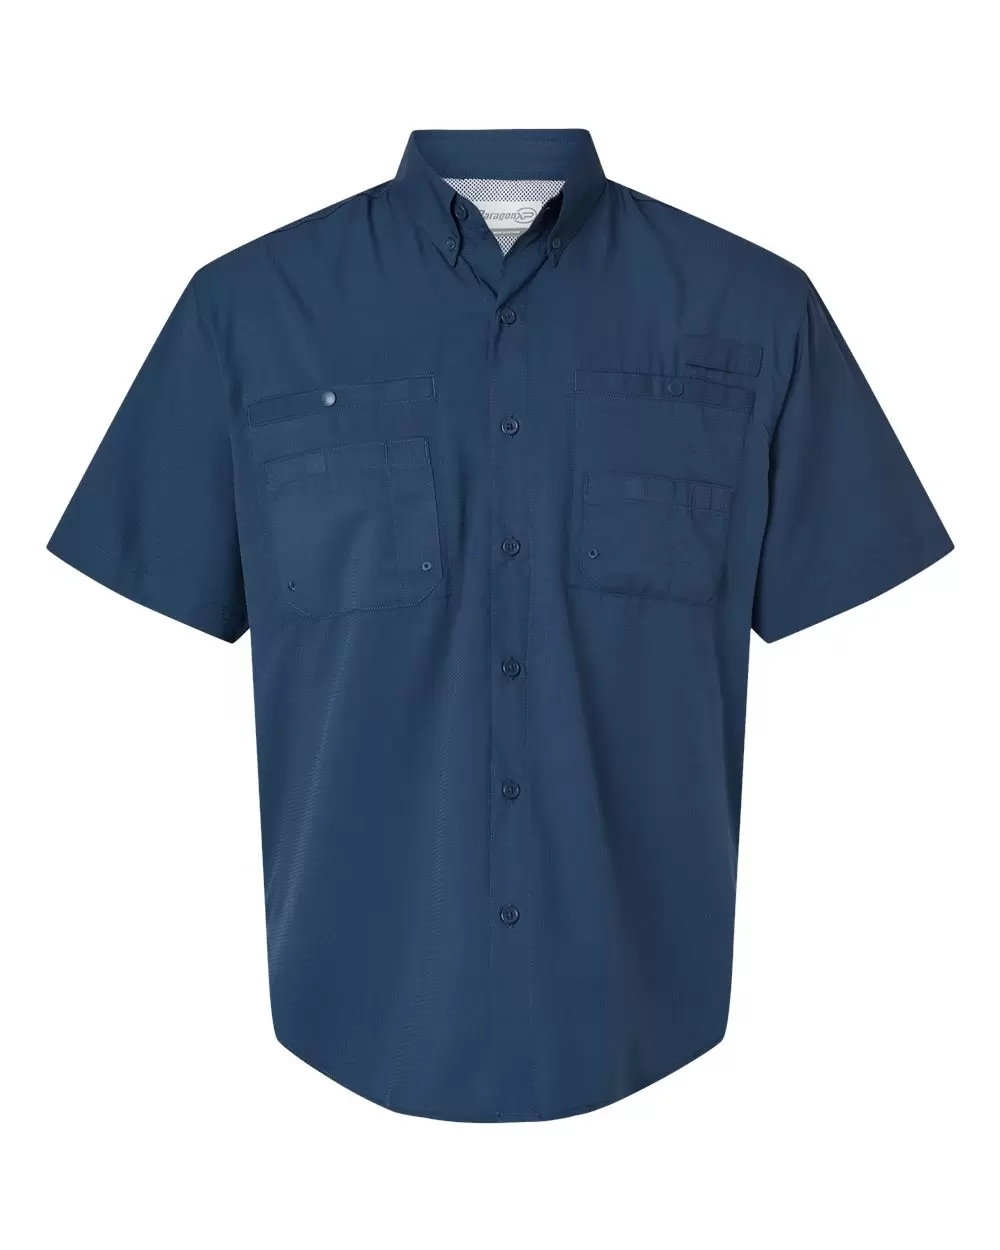 Paragon 700 Hatteras Performance Short Sleeve Fishing Shirt - Navy - S